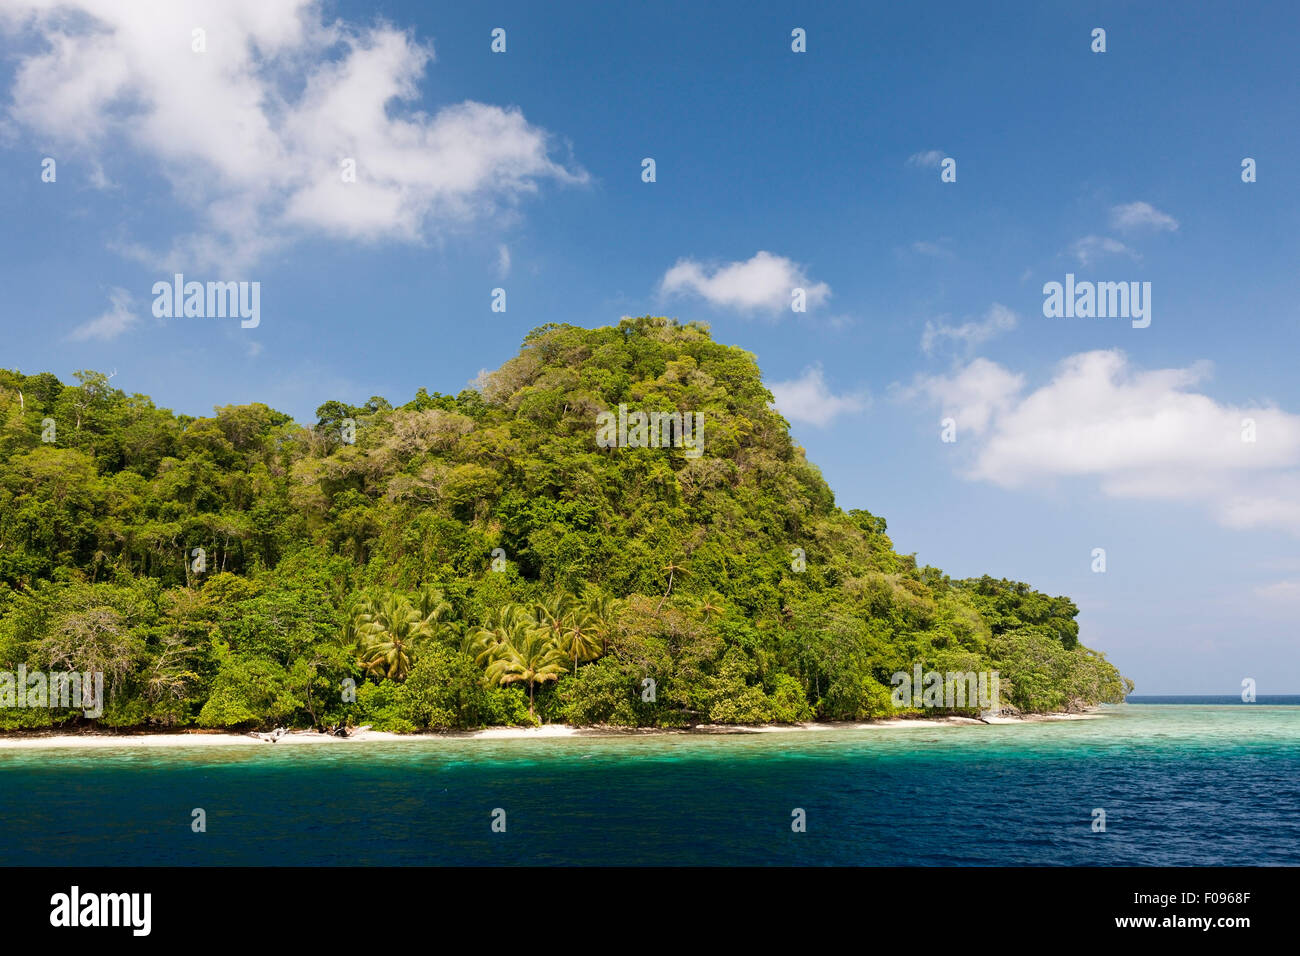 Isola tropicale, isole Florida, Isole Salomone Foto stock - Alamy